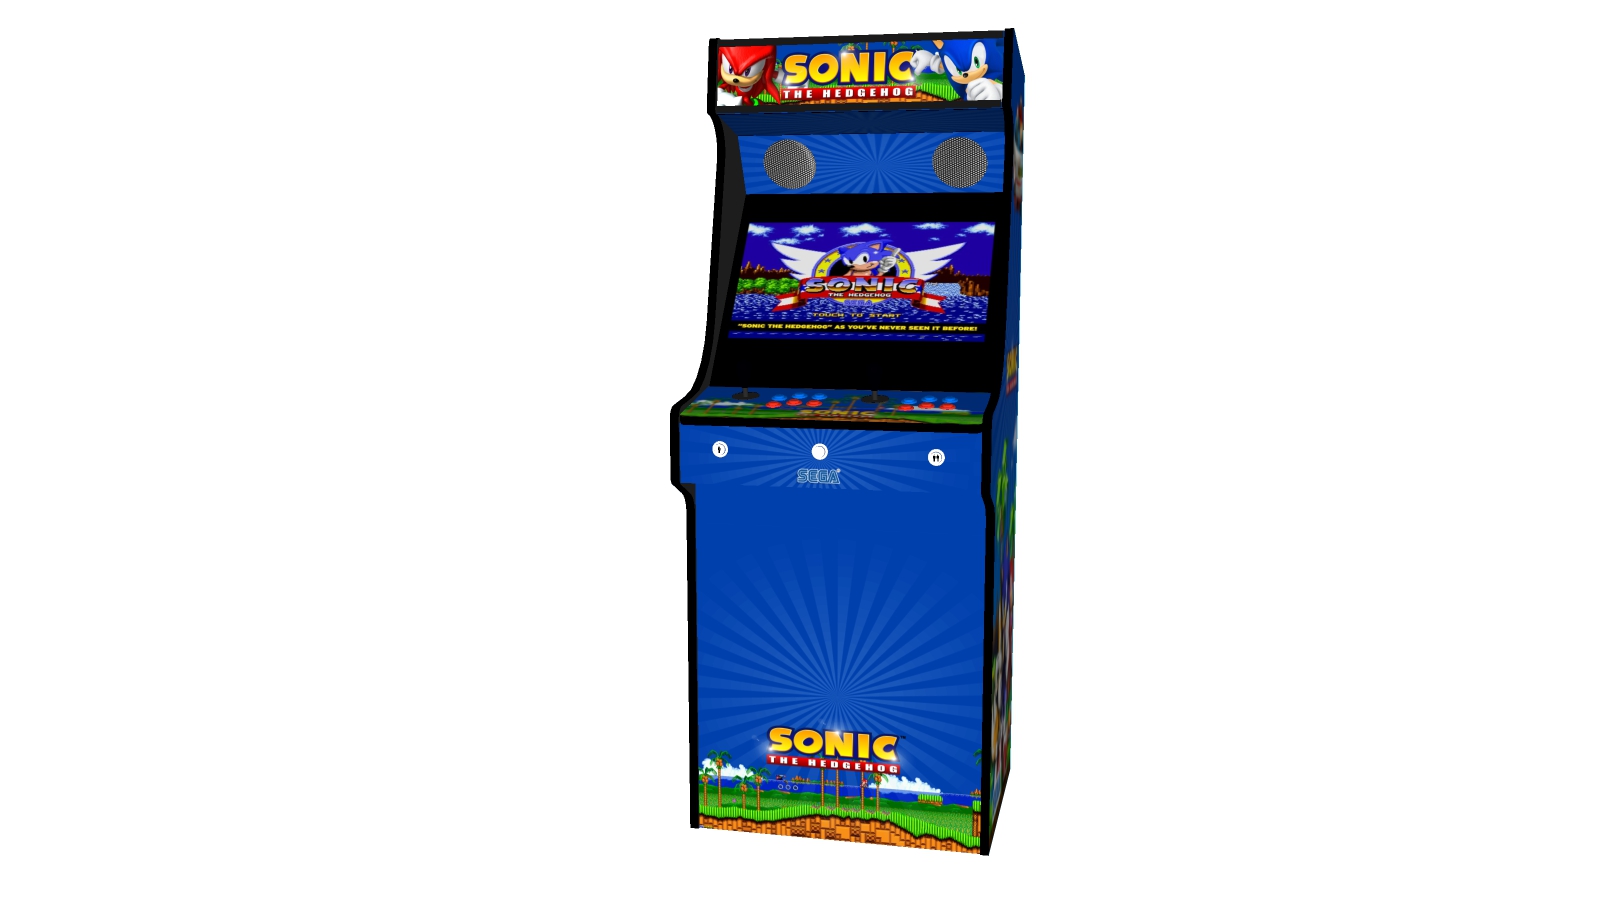 Sonic arcade Bartop Sides Arcade Artwork Overlay Graphic Stickers 